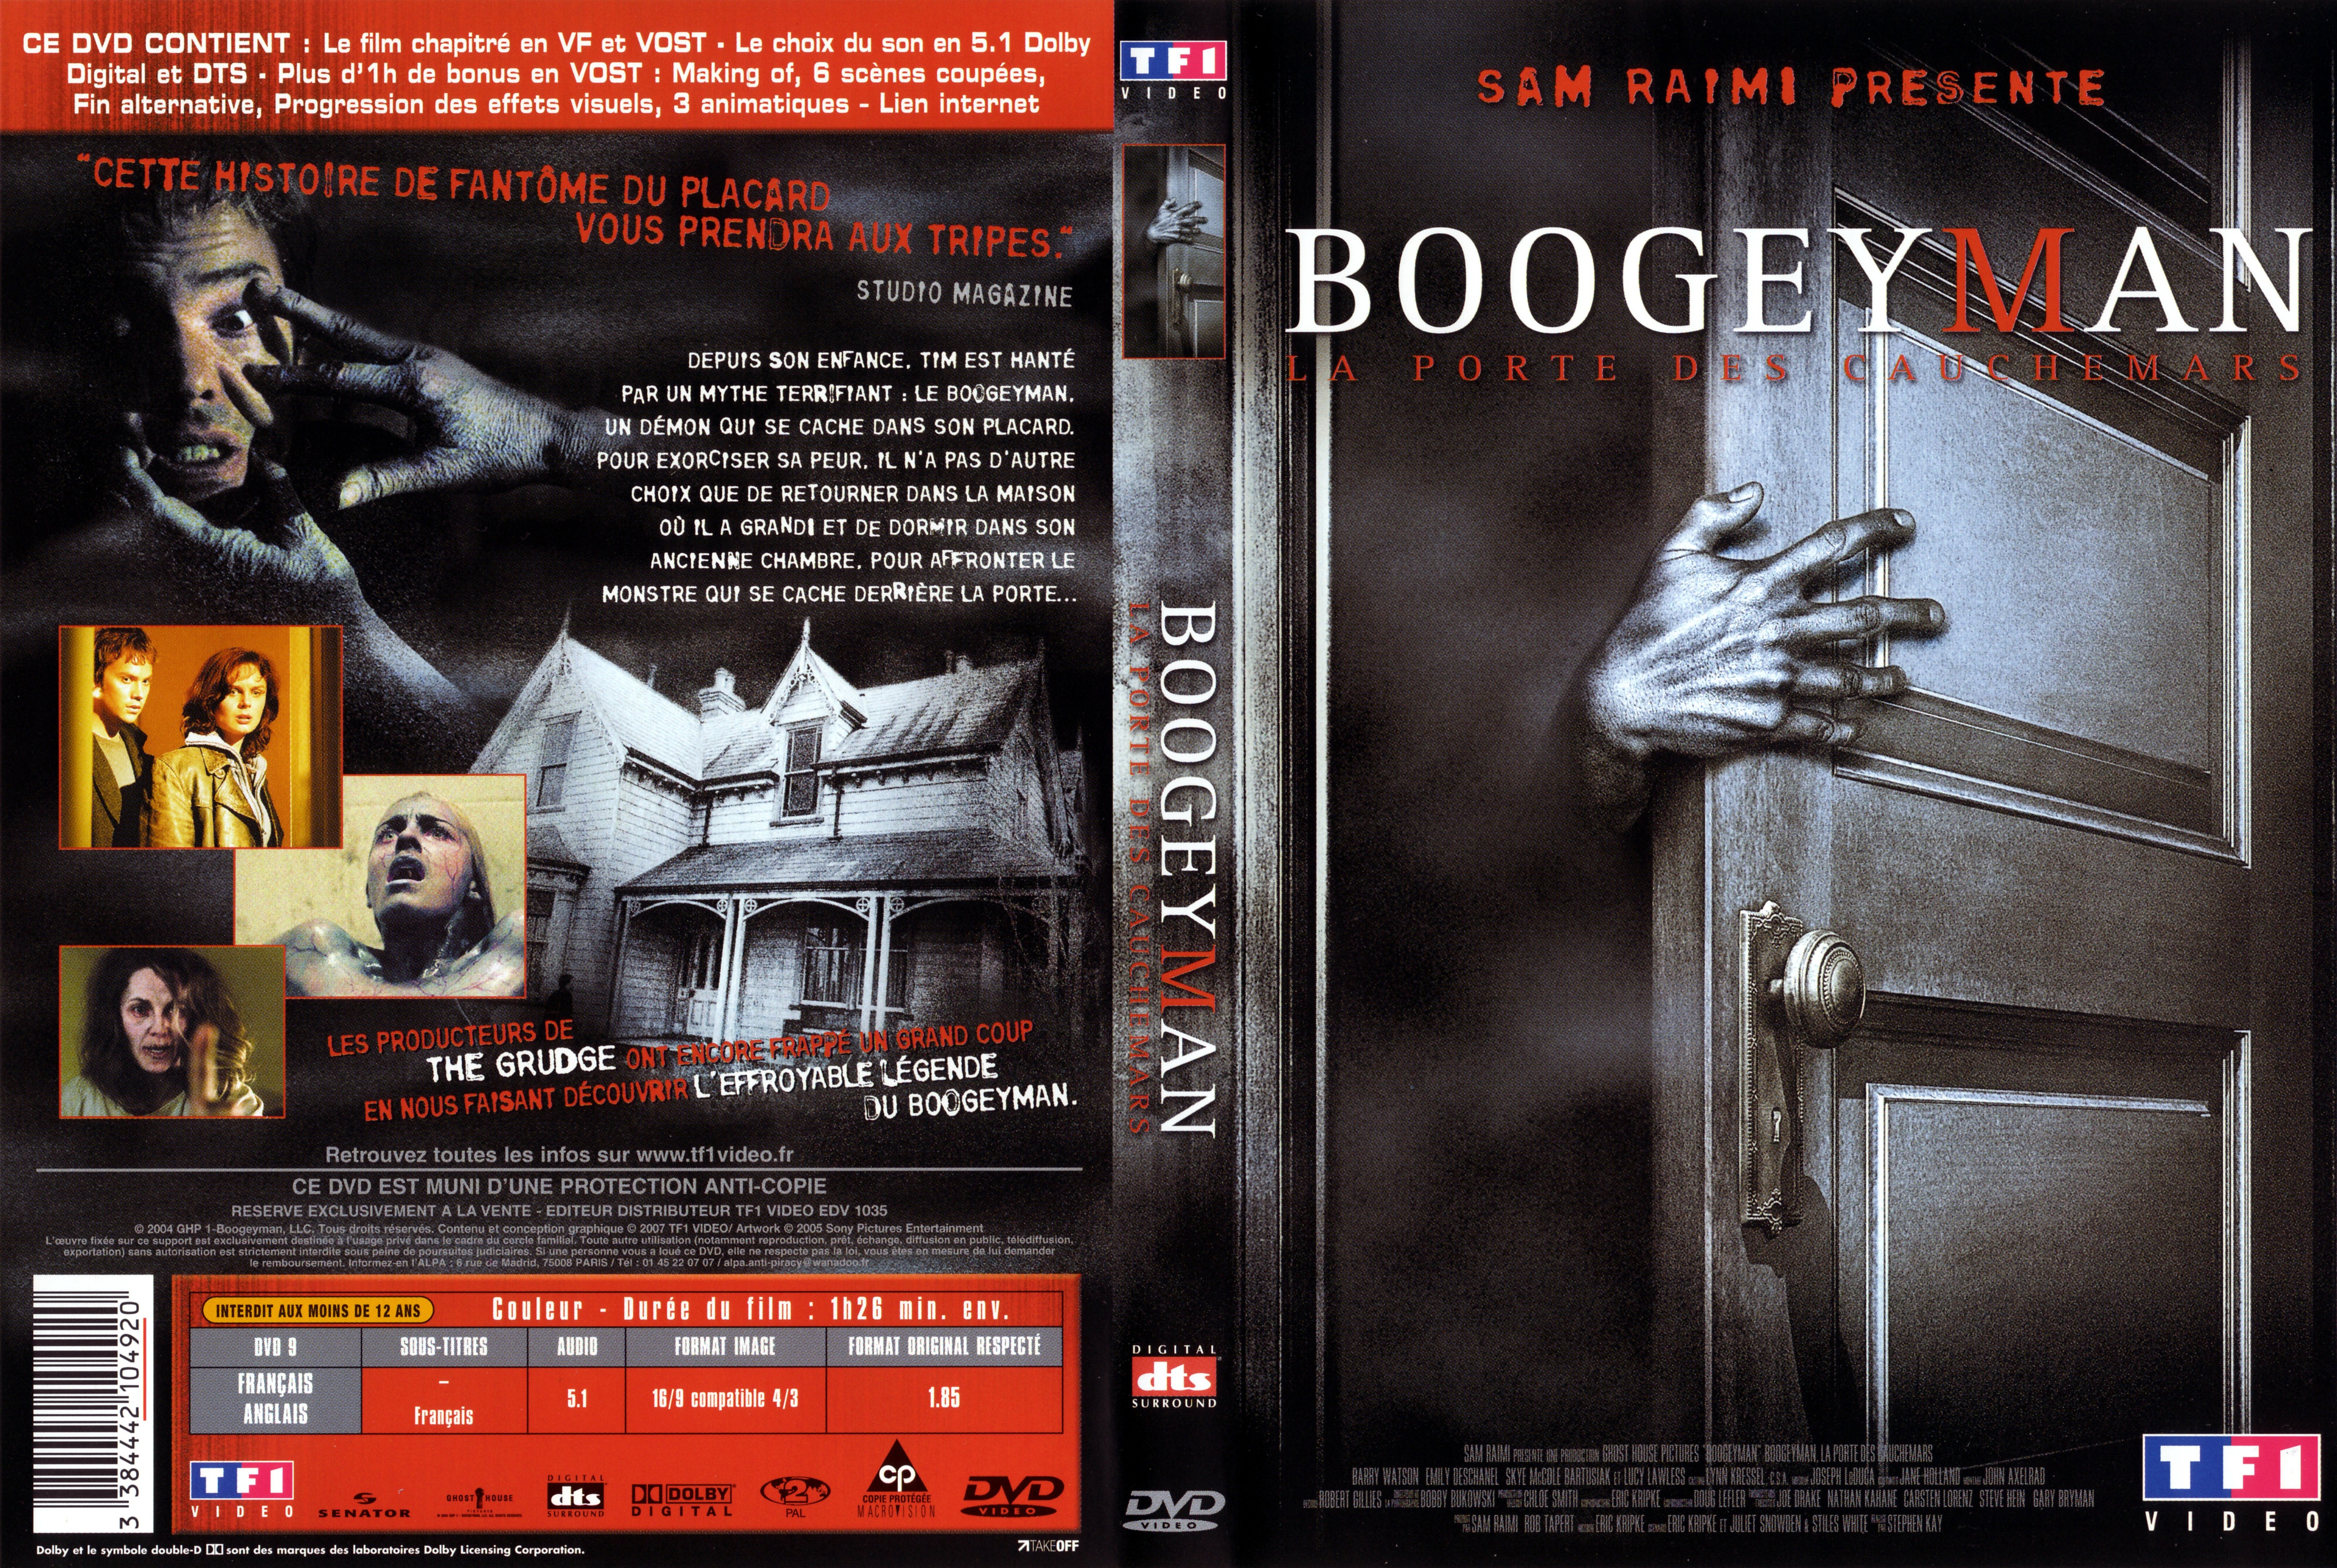 Jaquette DVD Boogeyman v3